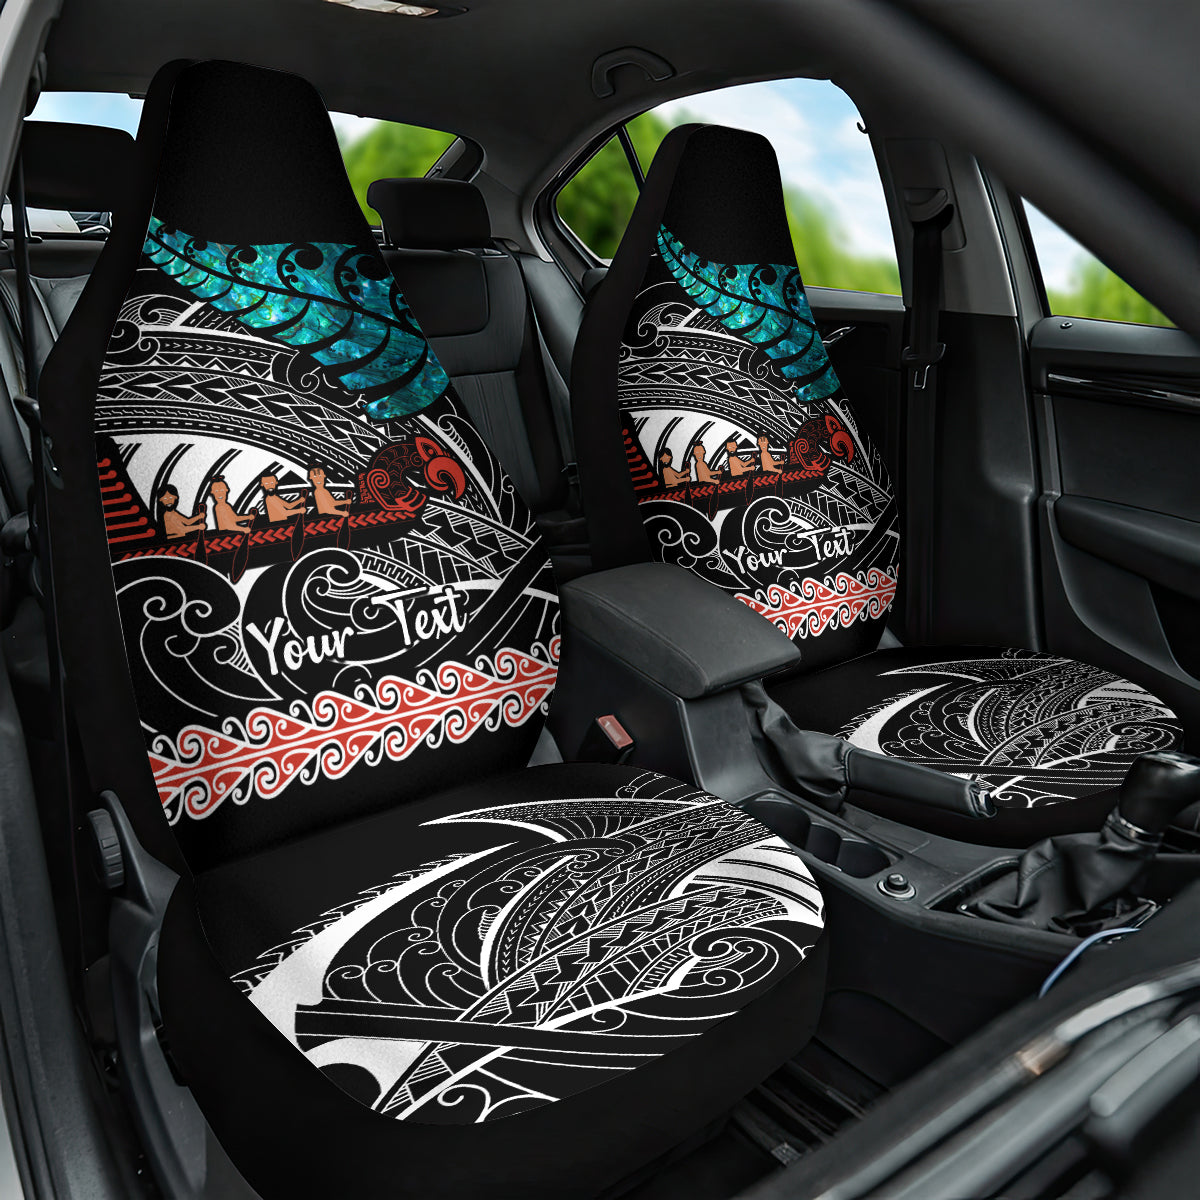 Personalised New Zealand Waka Car Seat Cover Aotearoa Maori Silver Fern Pattern LT14 One Size Black - Polynesian Pride